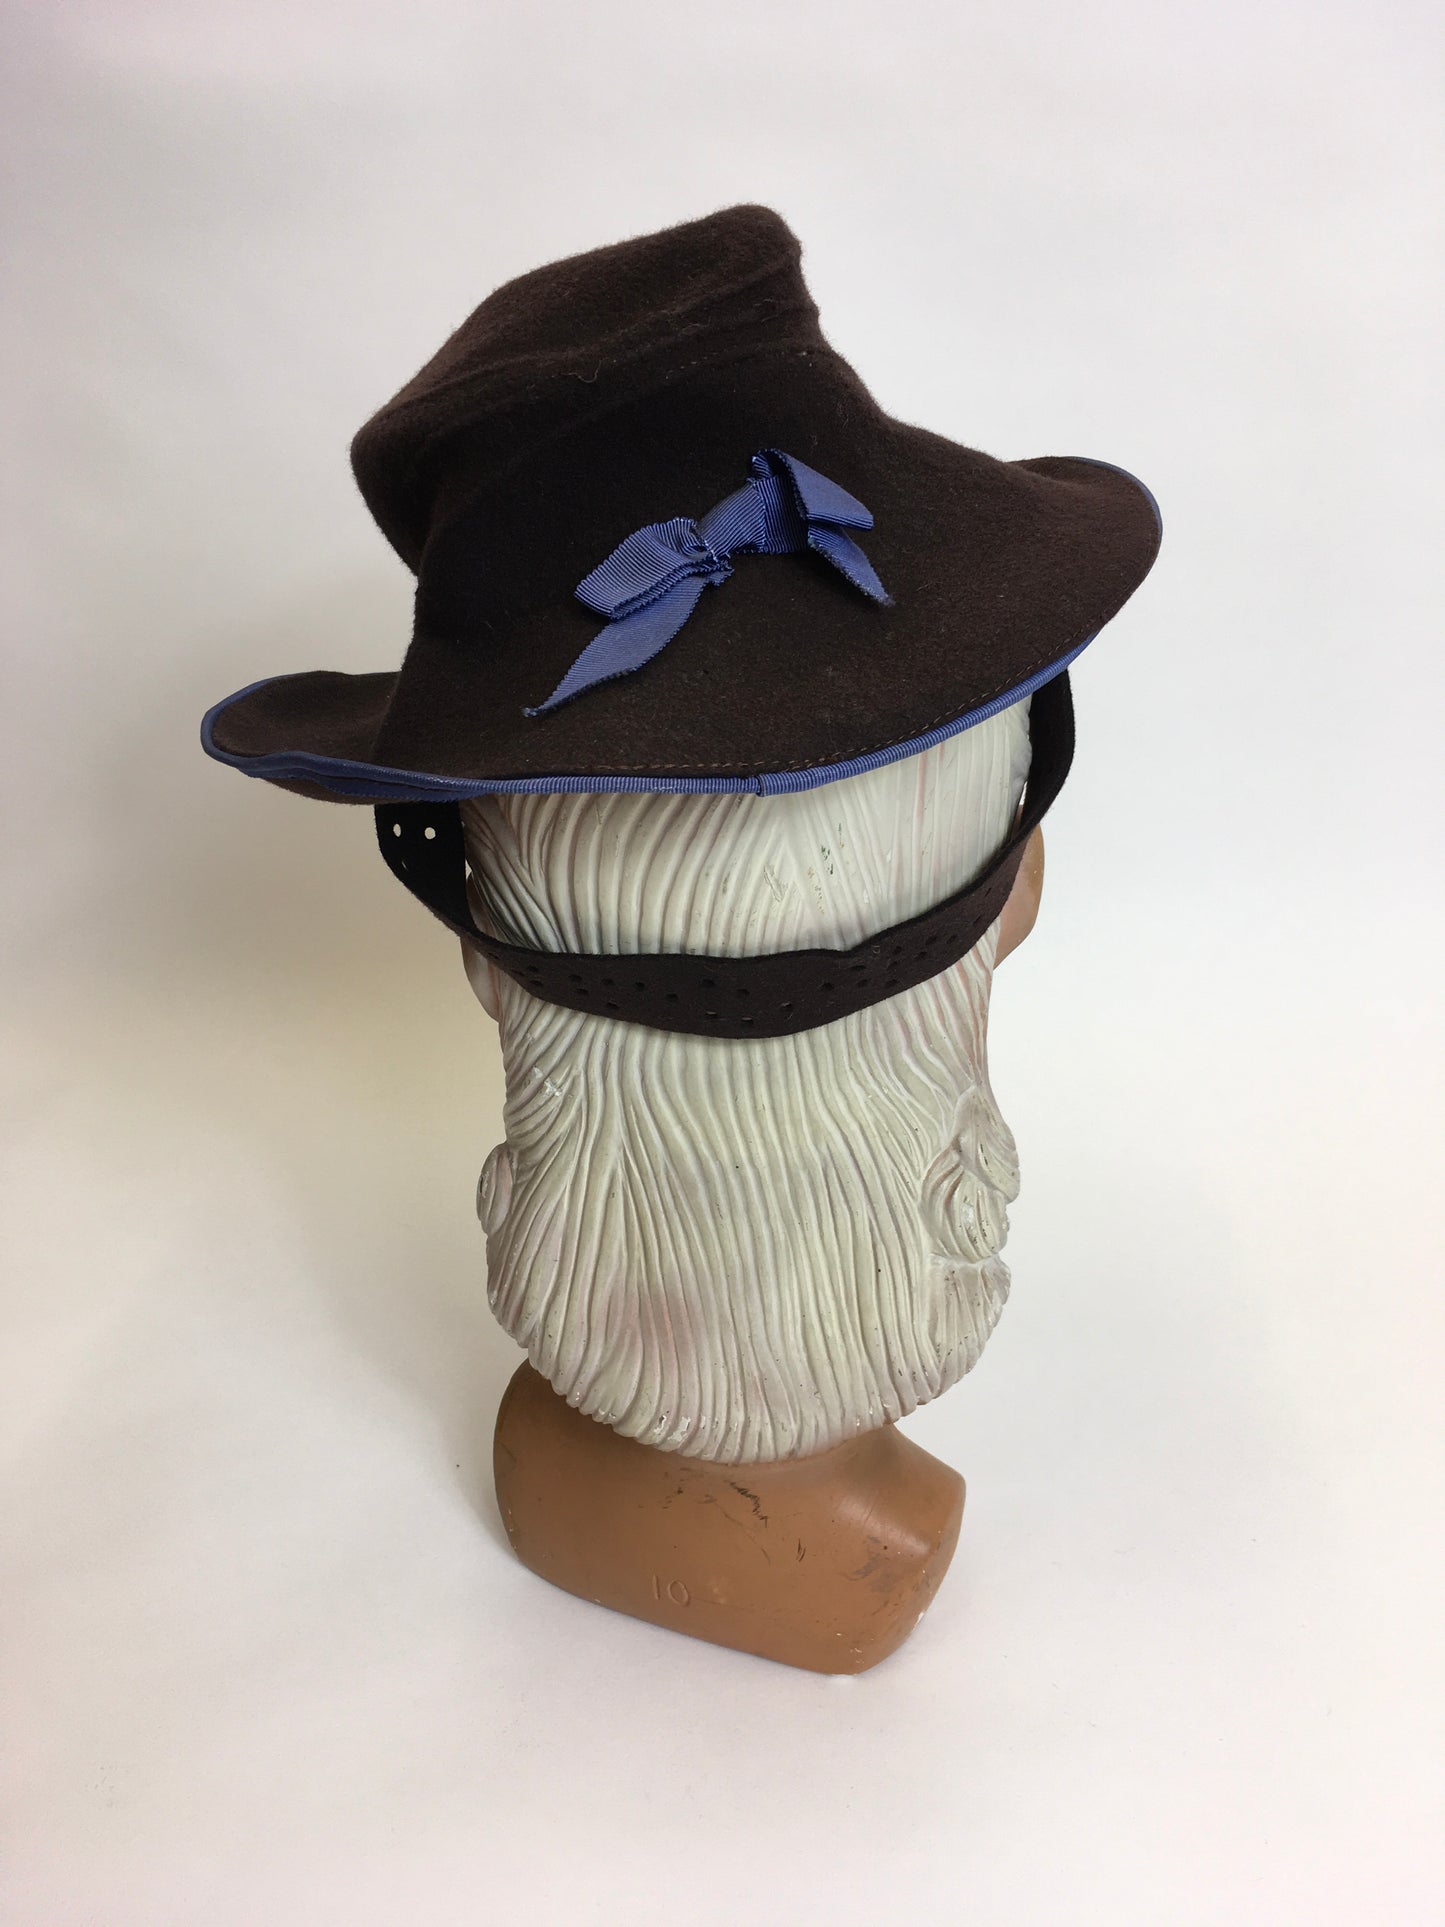 Original 1940’s Brown Felt Topper Hat - Adorned With A Powder Blue Bow